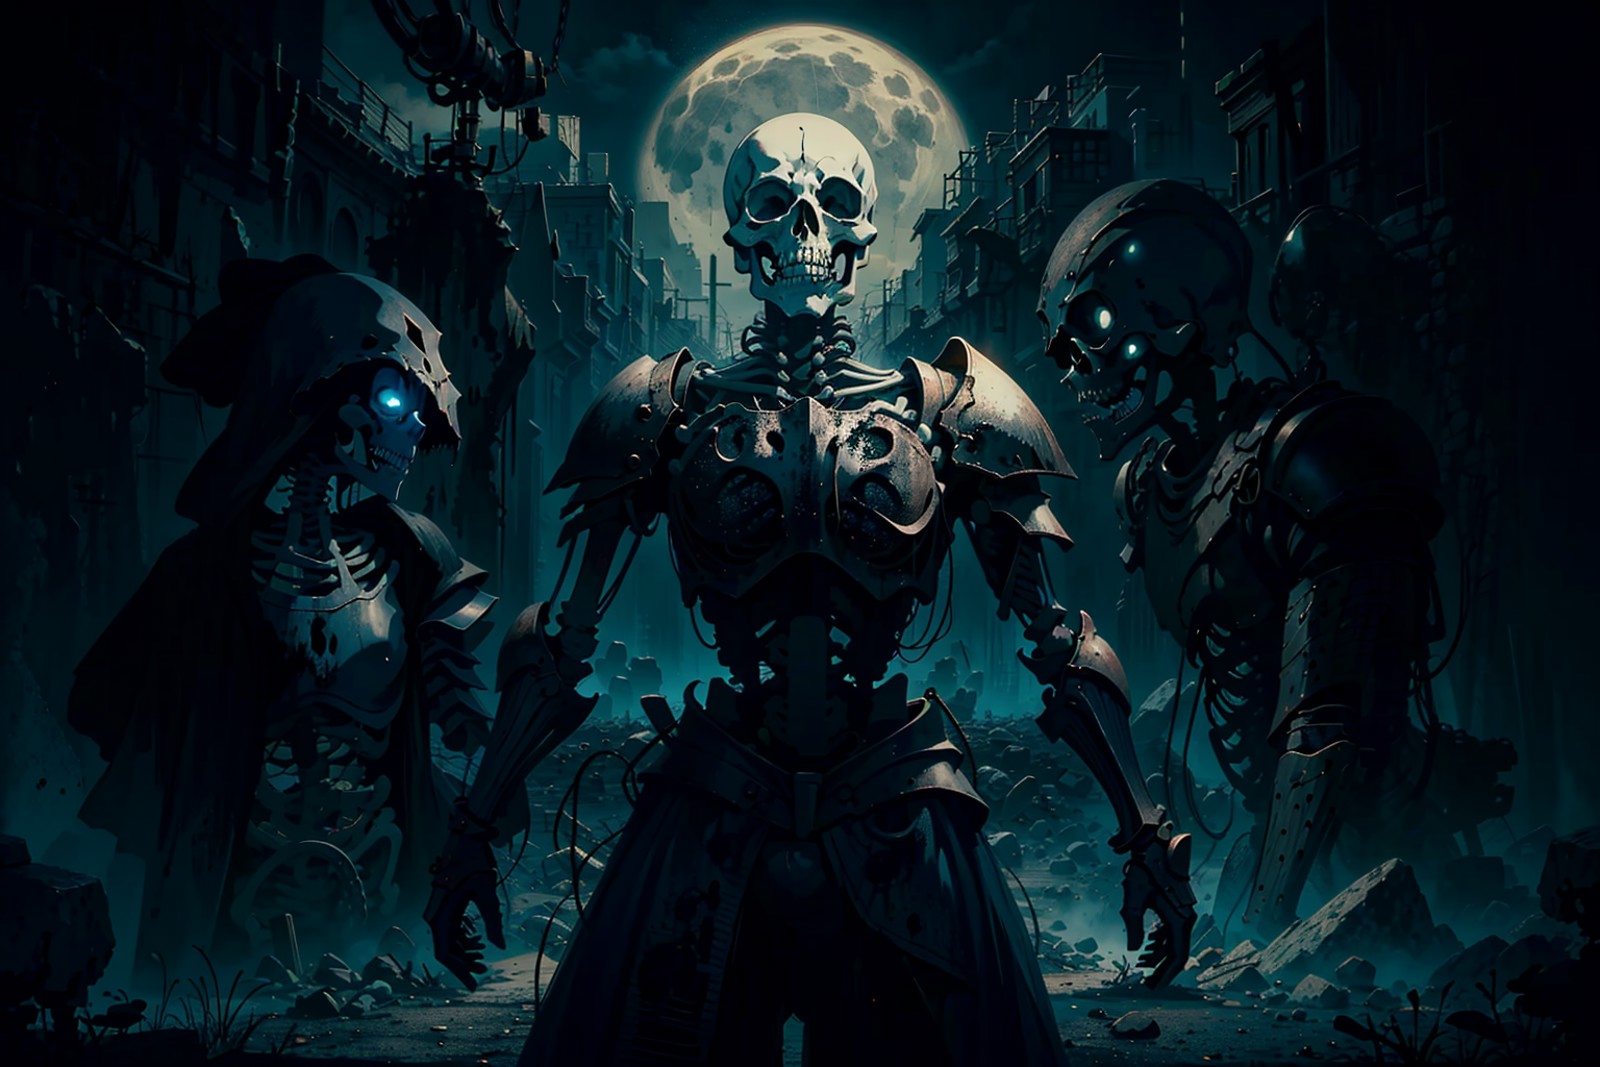 undead, skeleton knight, armor, sword, dark fantasy, spooky, ominous.